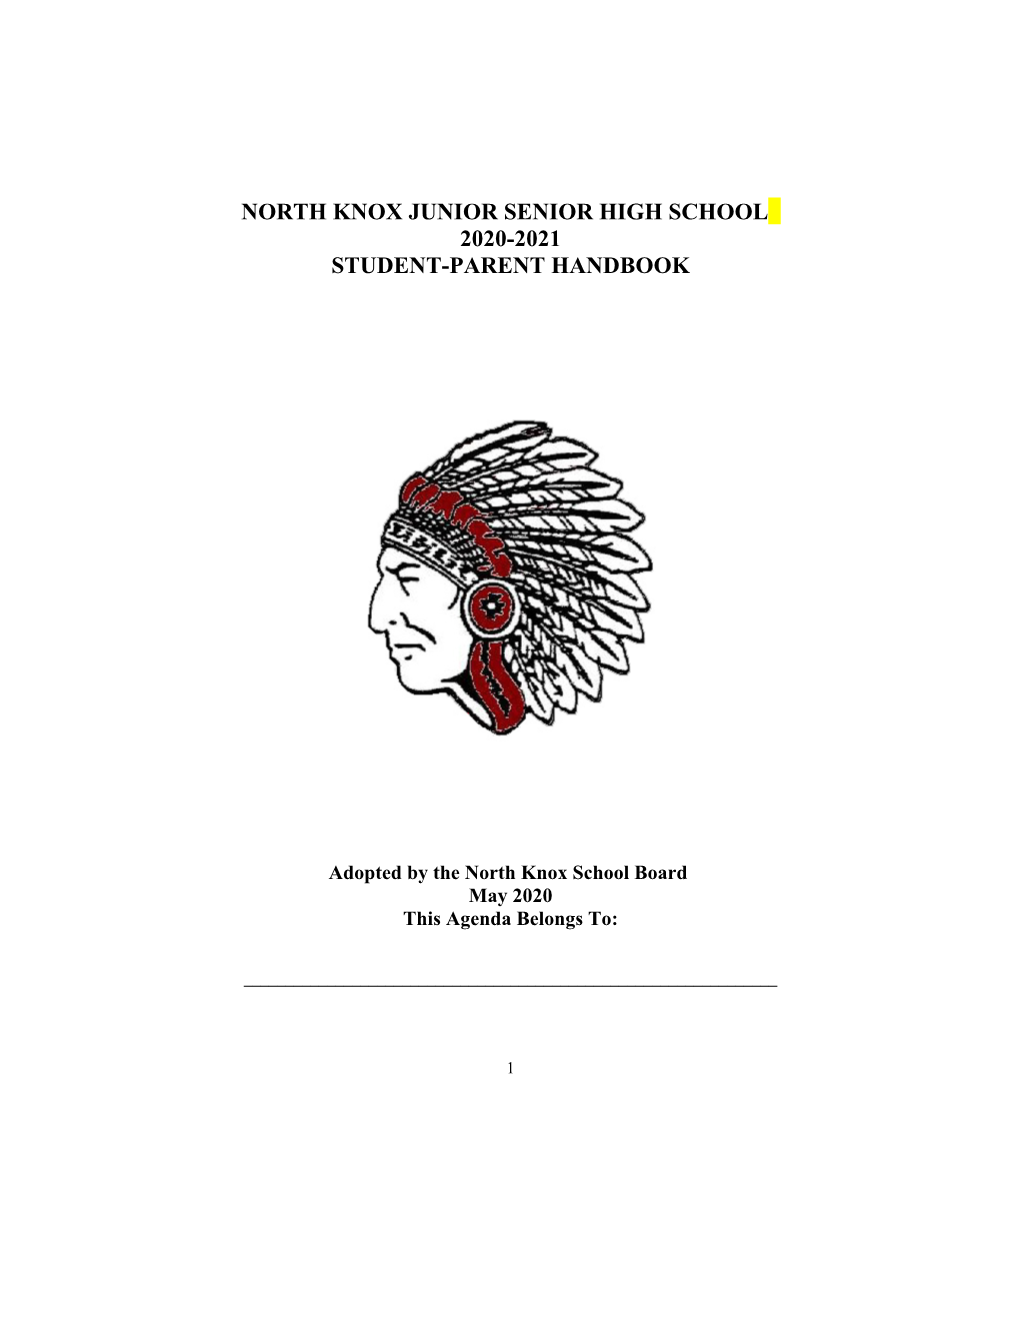 North Knox Junior Senior High School 2020-2021 Student-Parent Handbook